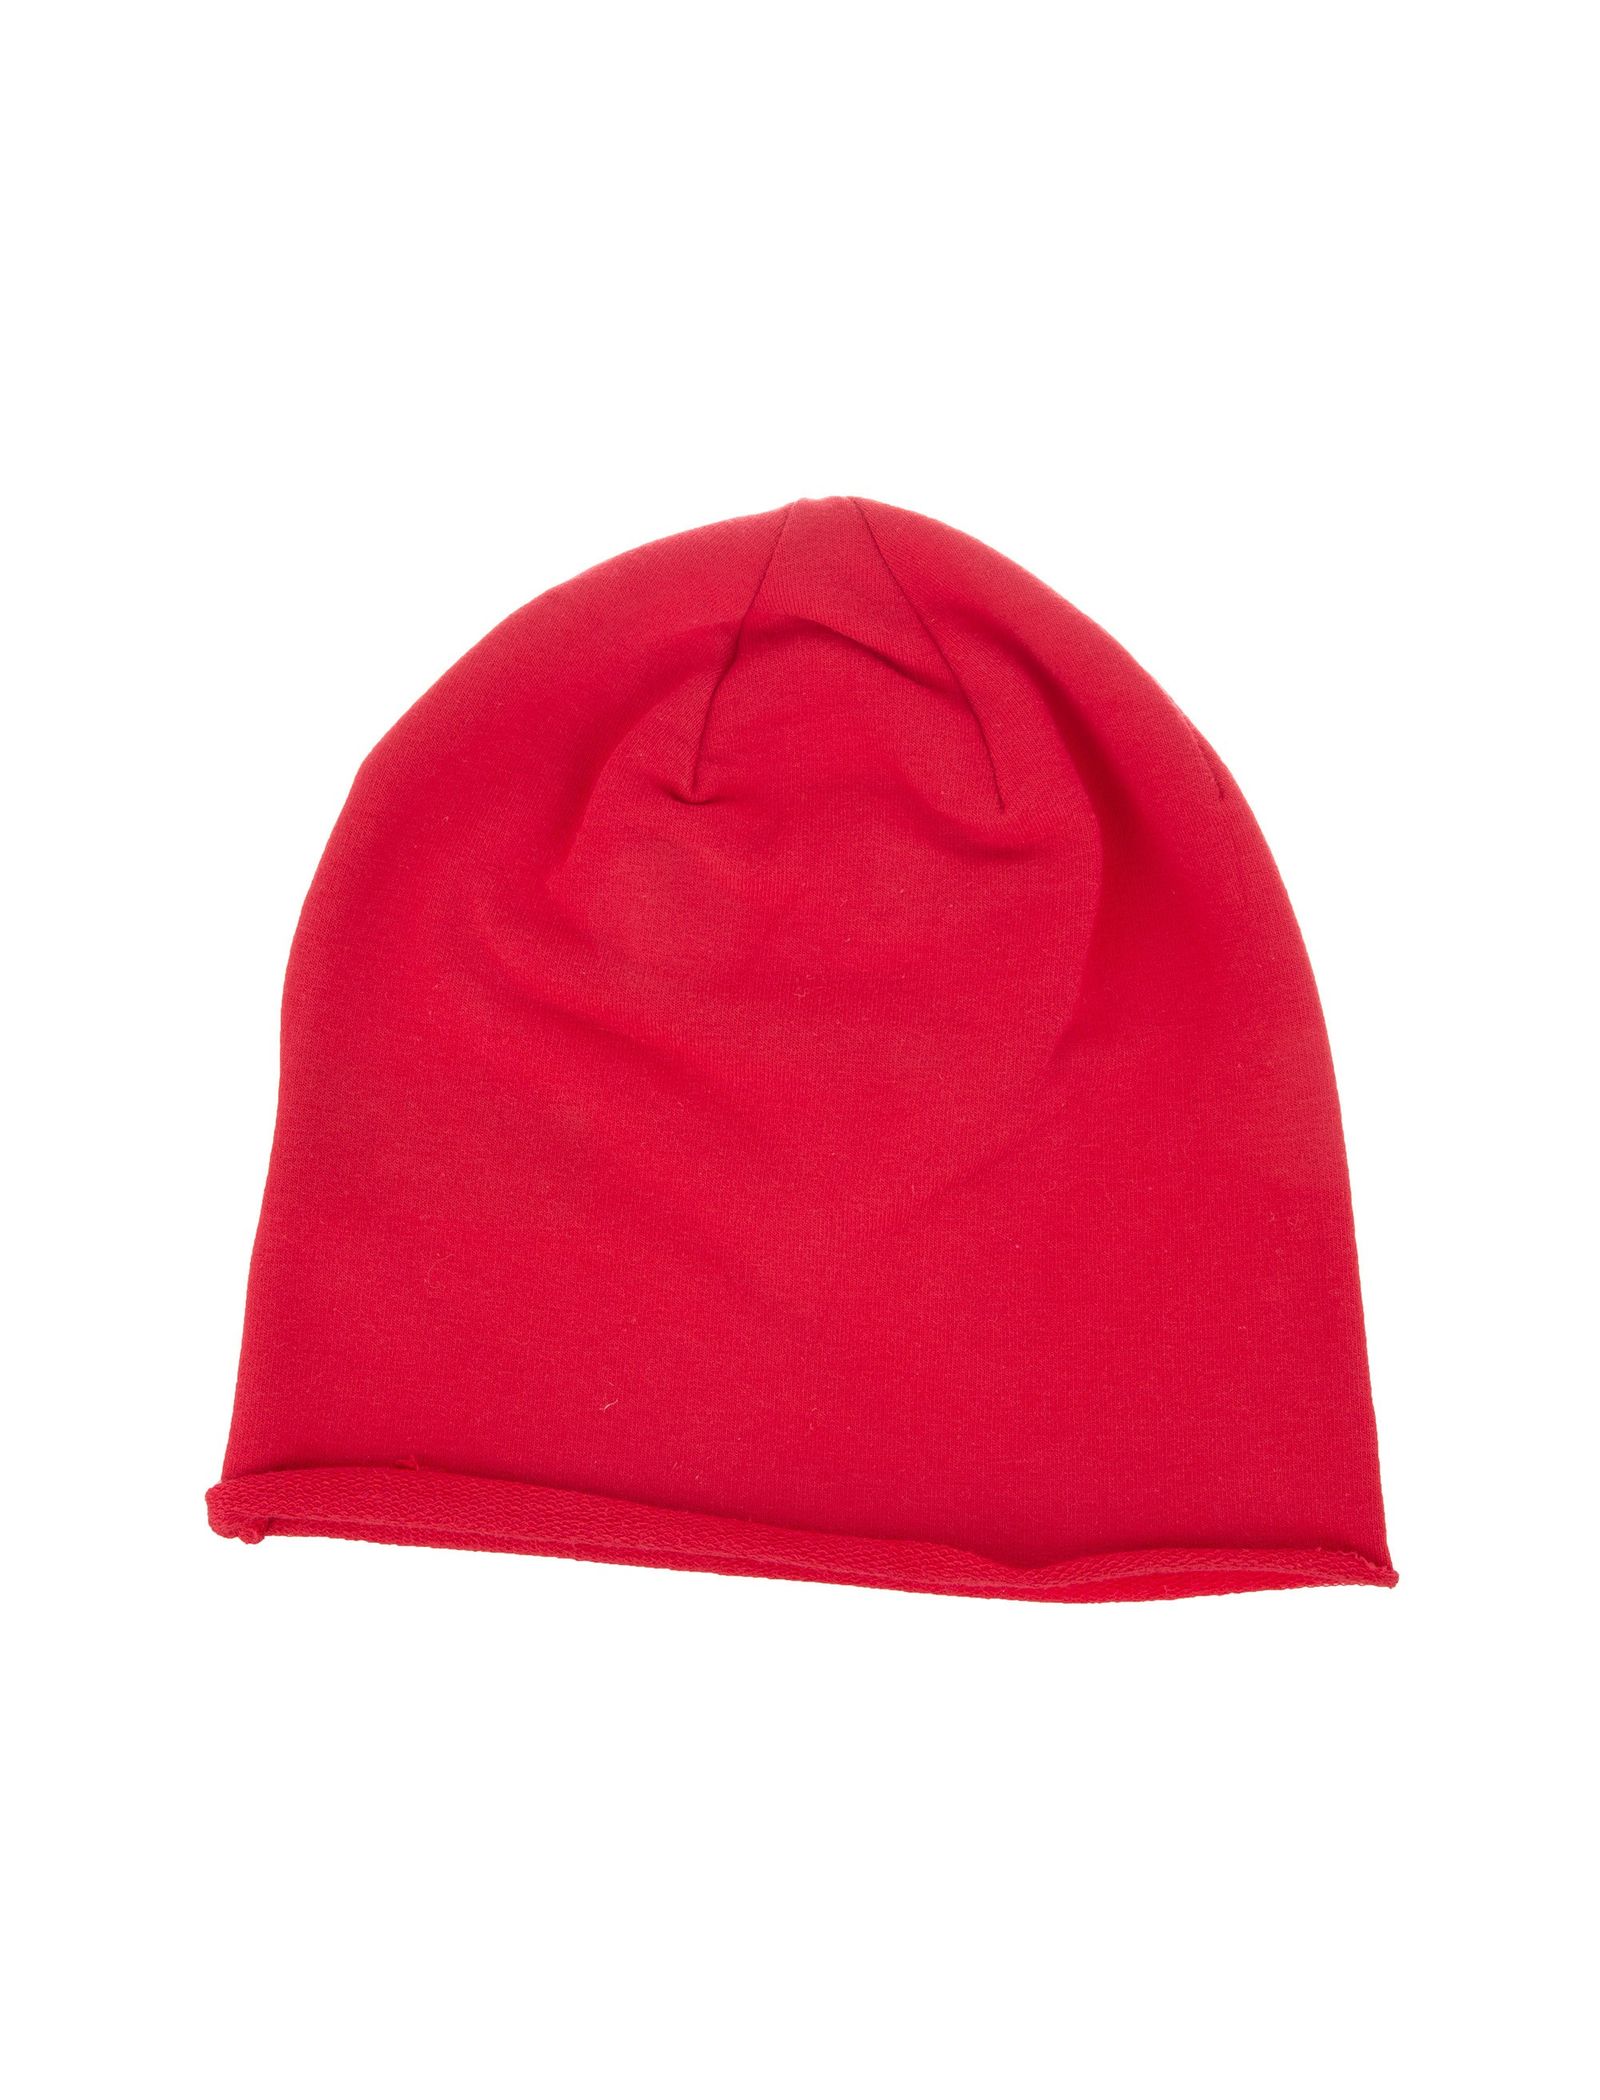 کلاه نخی بانی نوزادی پسرانه - بلوکیدز - قرمز - 2